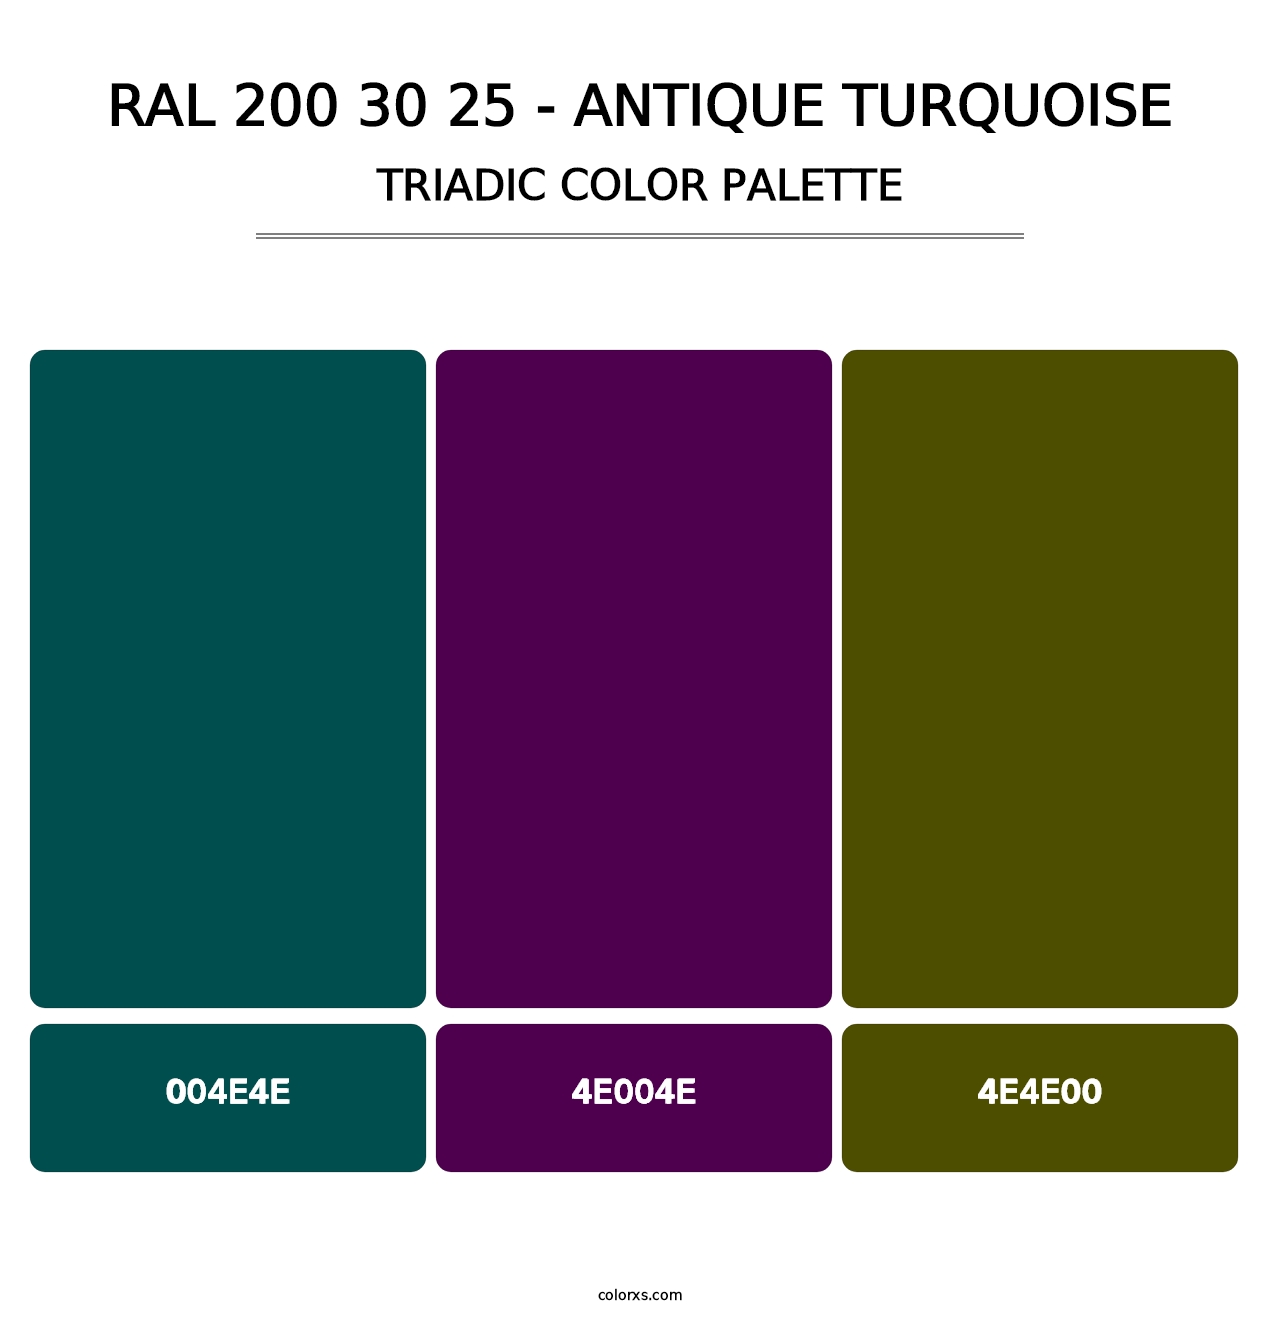 RAL 200 30 25 - Antique Turquoise - Triadic Color Palette